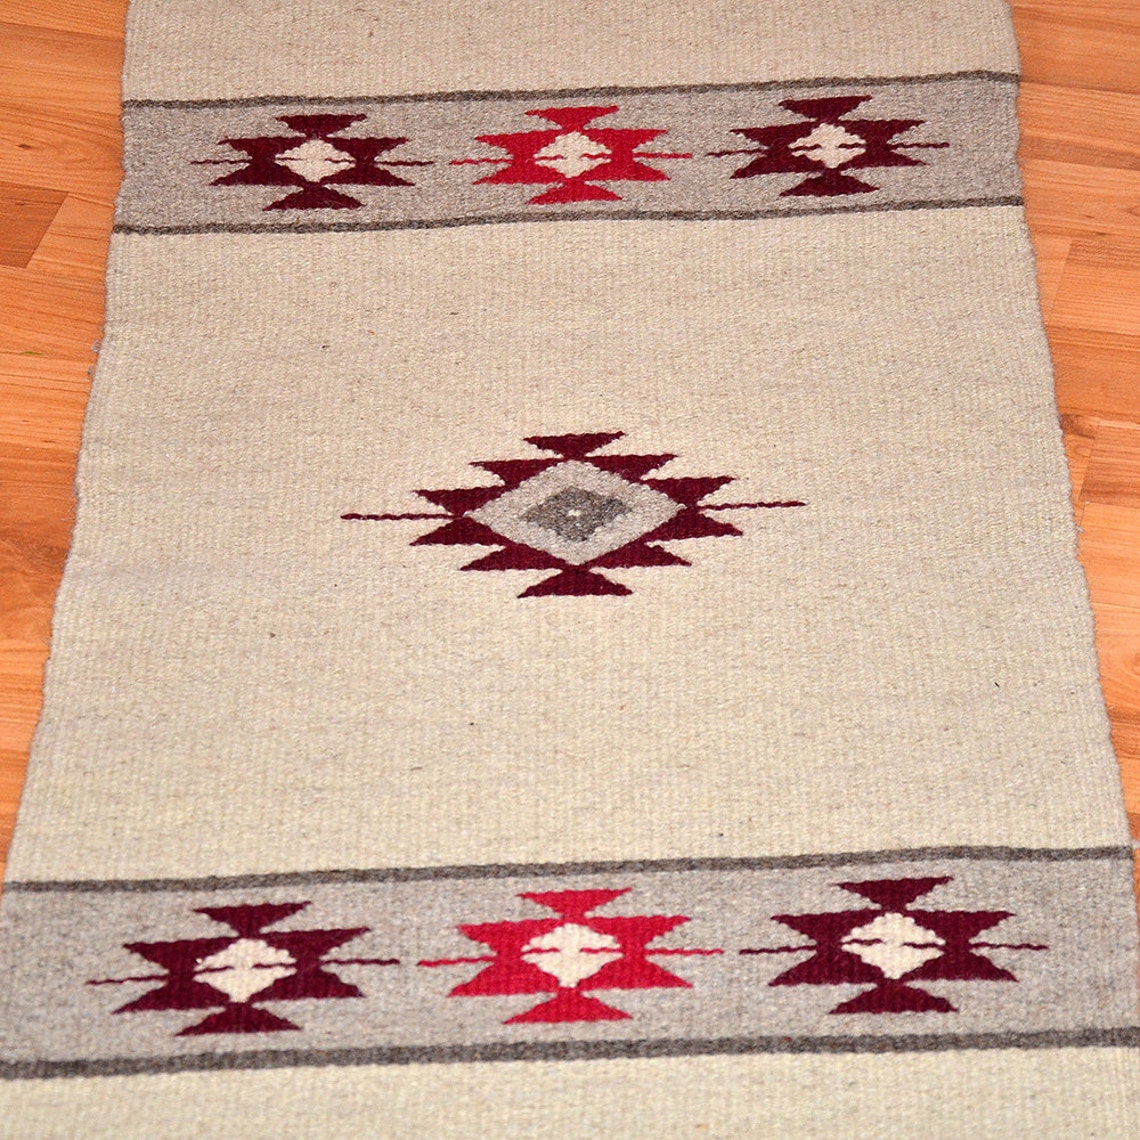 Geometric handwoven kilim rug handwoven off white/cream kilim | Etsy